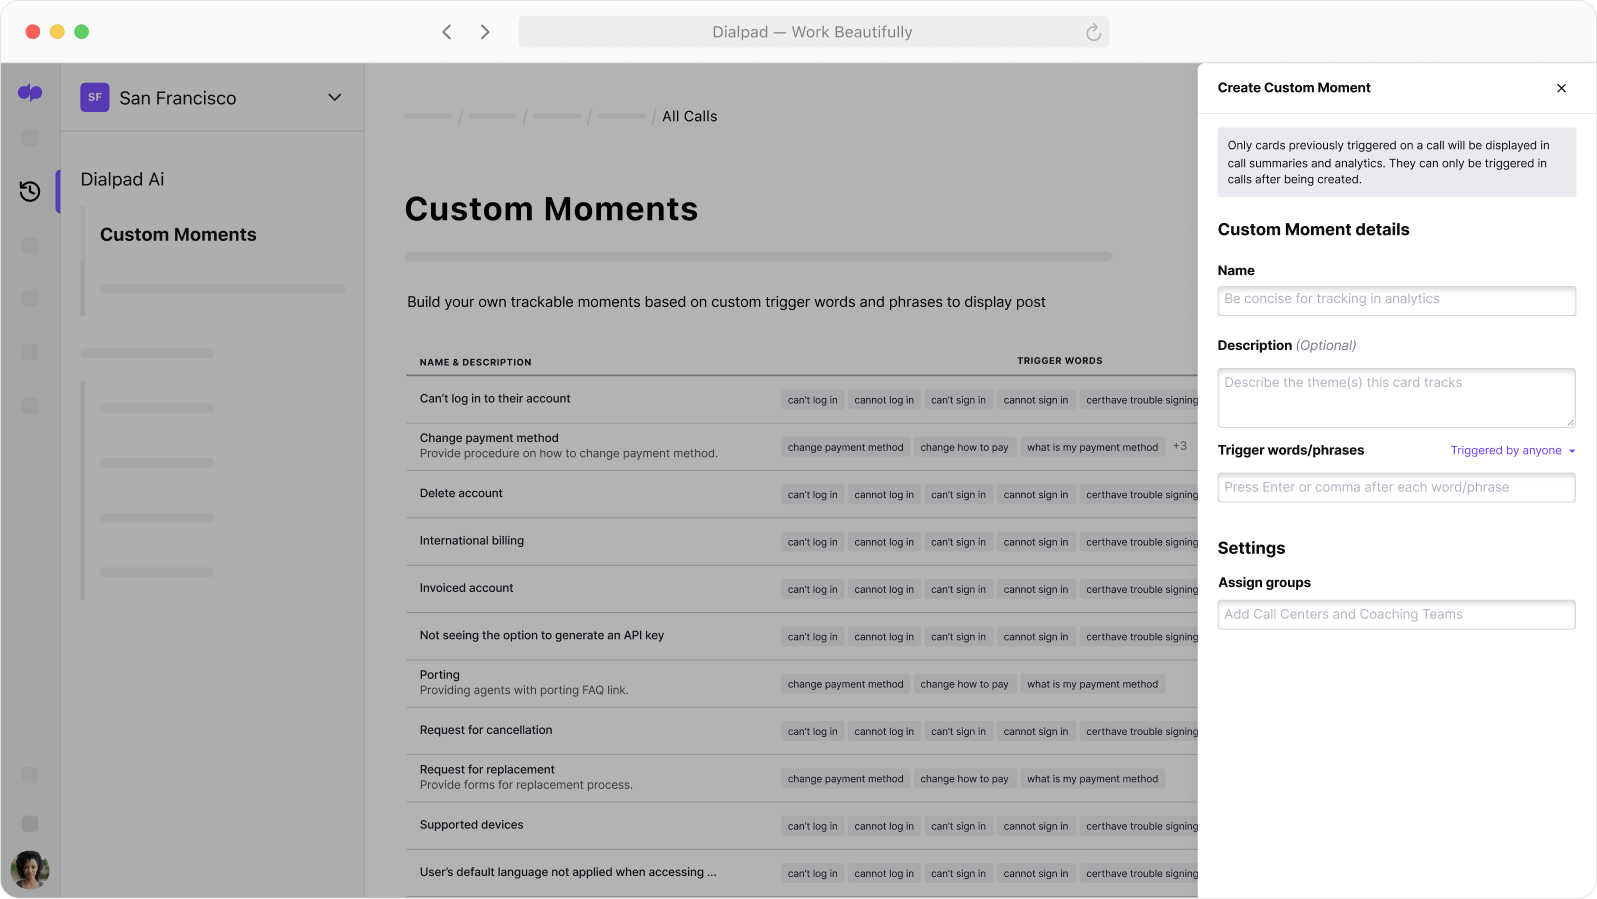 Screenshot of creating a Custom Moment in Dialpad